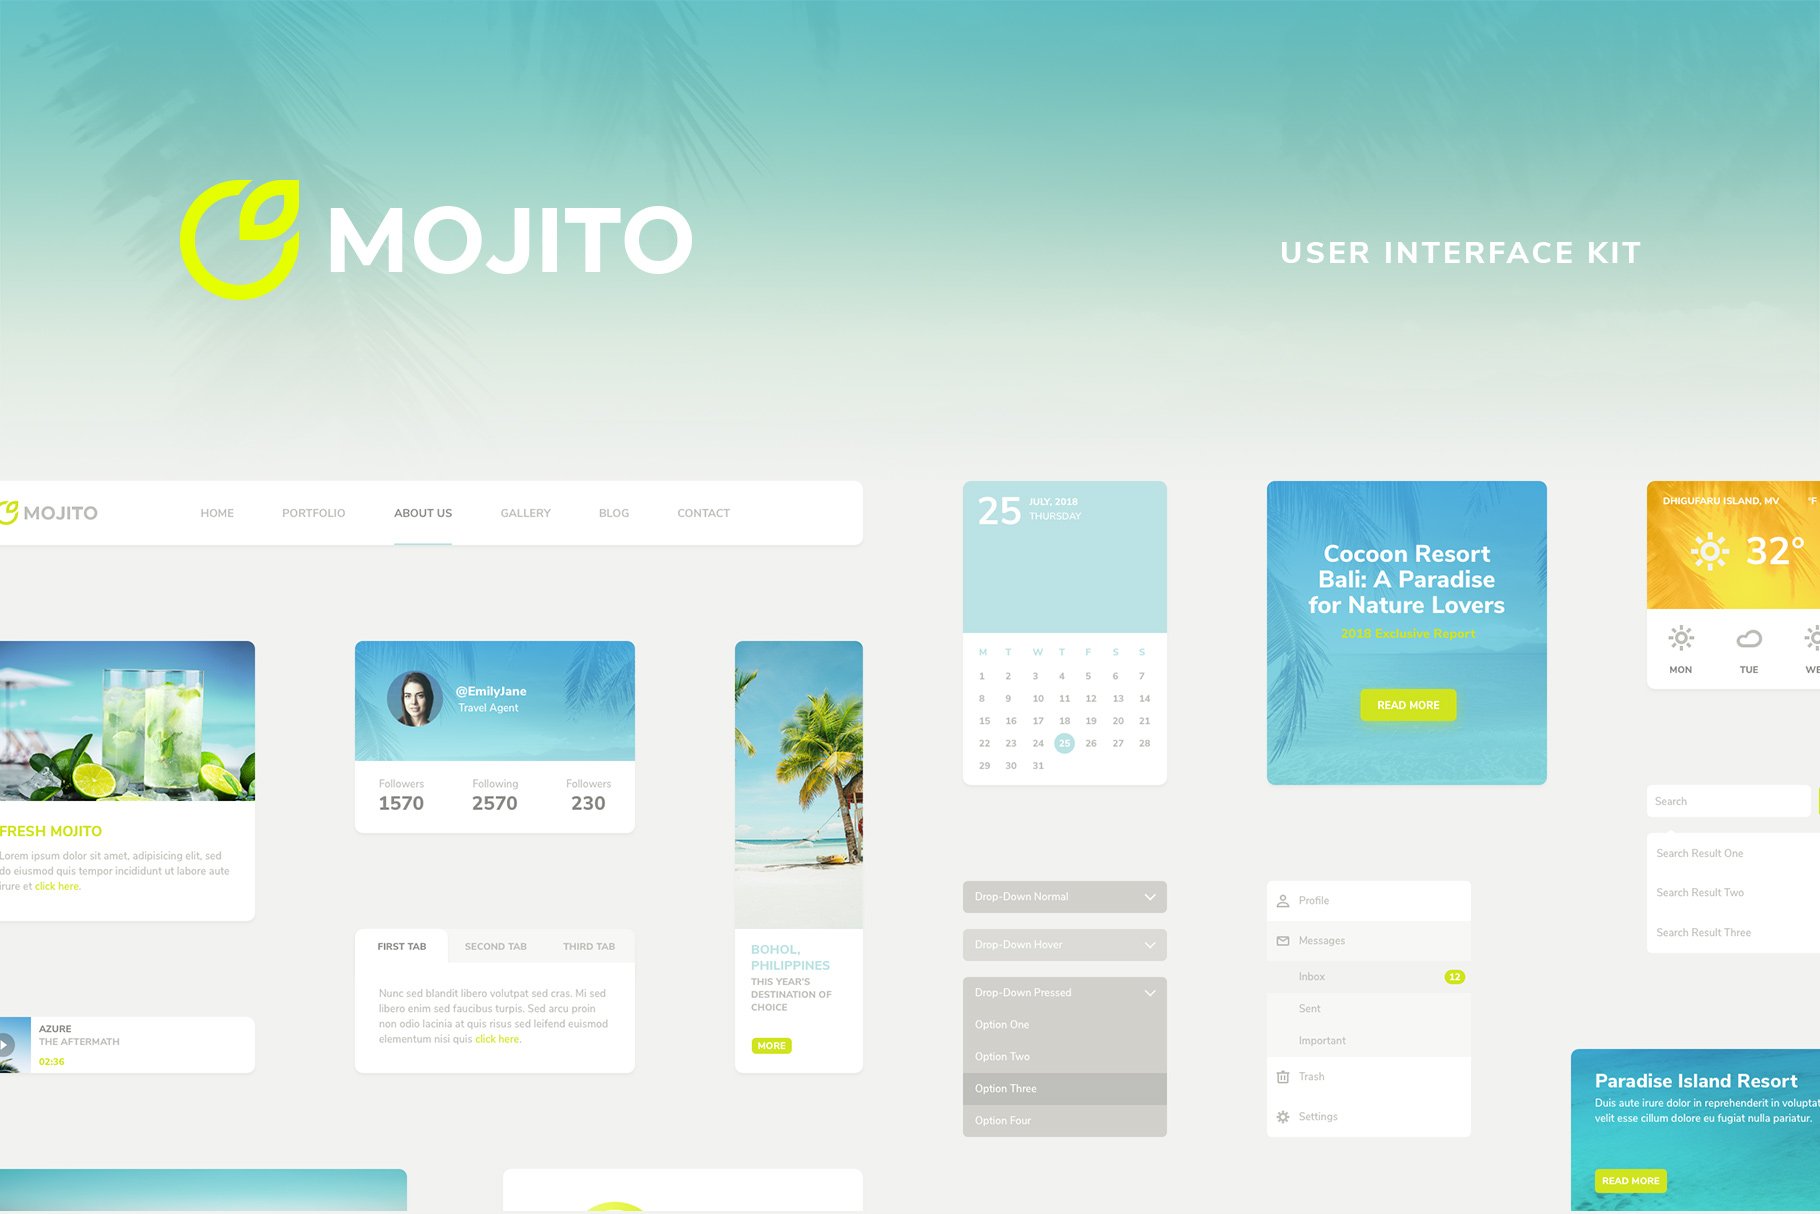 Mojito UI Kit cover image.